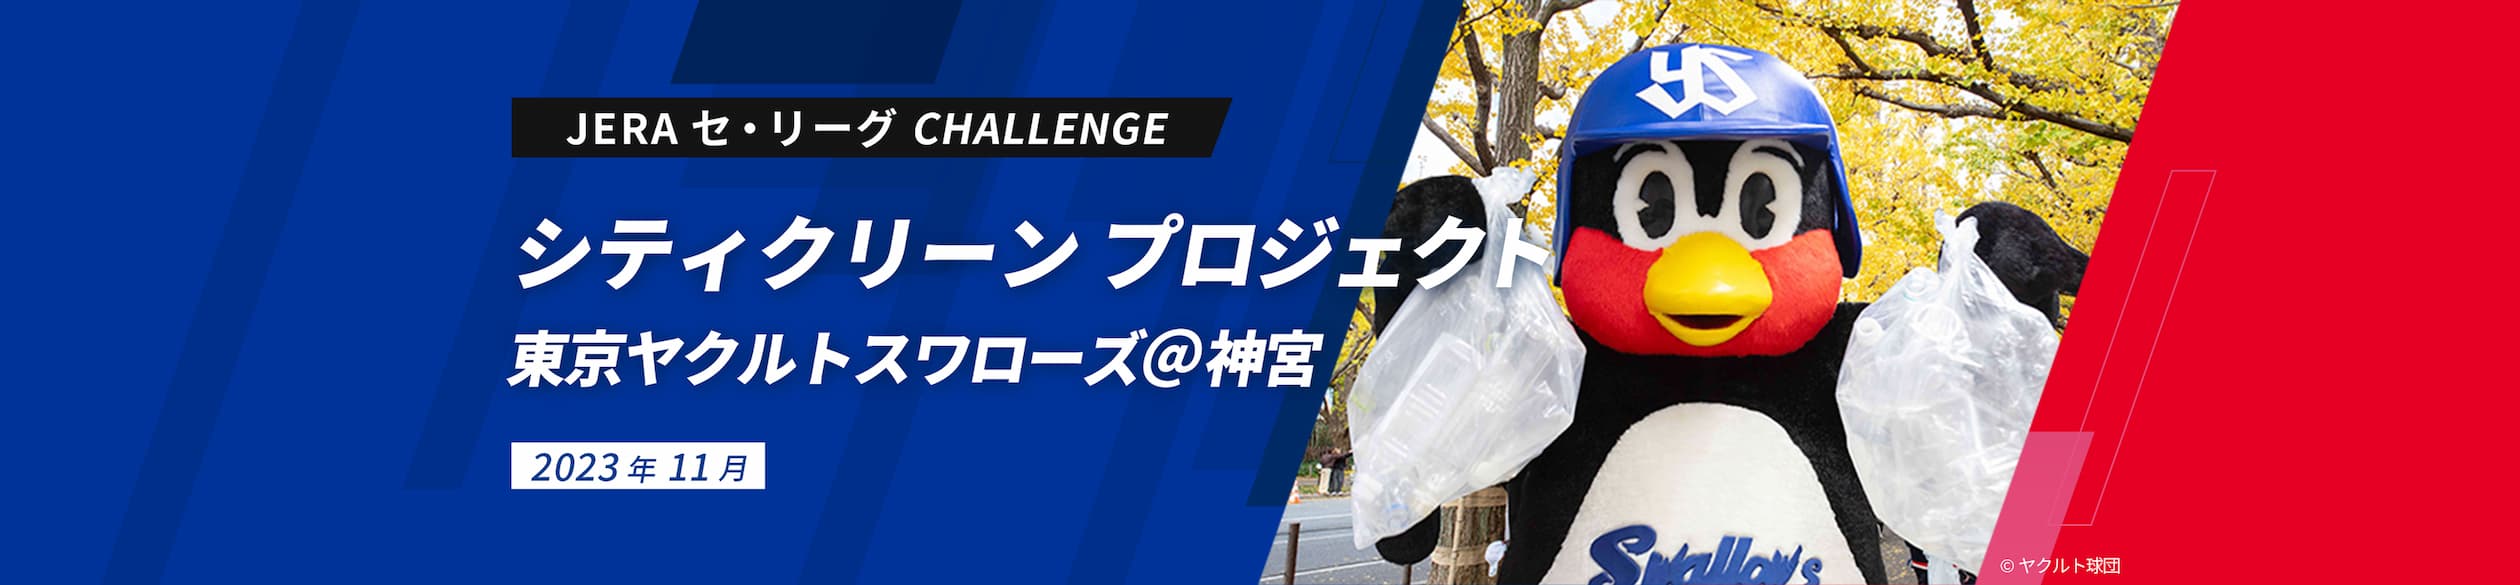 JERA セ・リーグ CHALLENGE シティクリーン プロジェクト 東京ヤクルトスワローズ＠神宮2023年11月